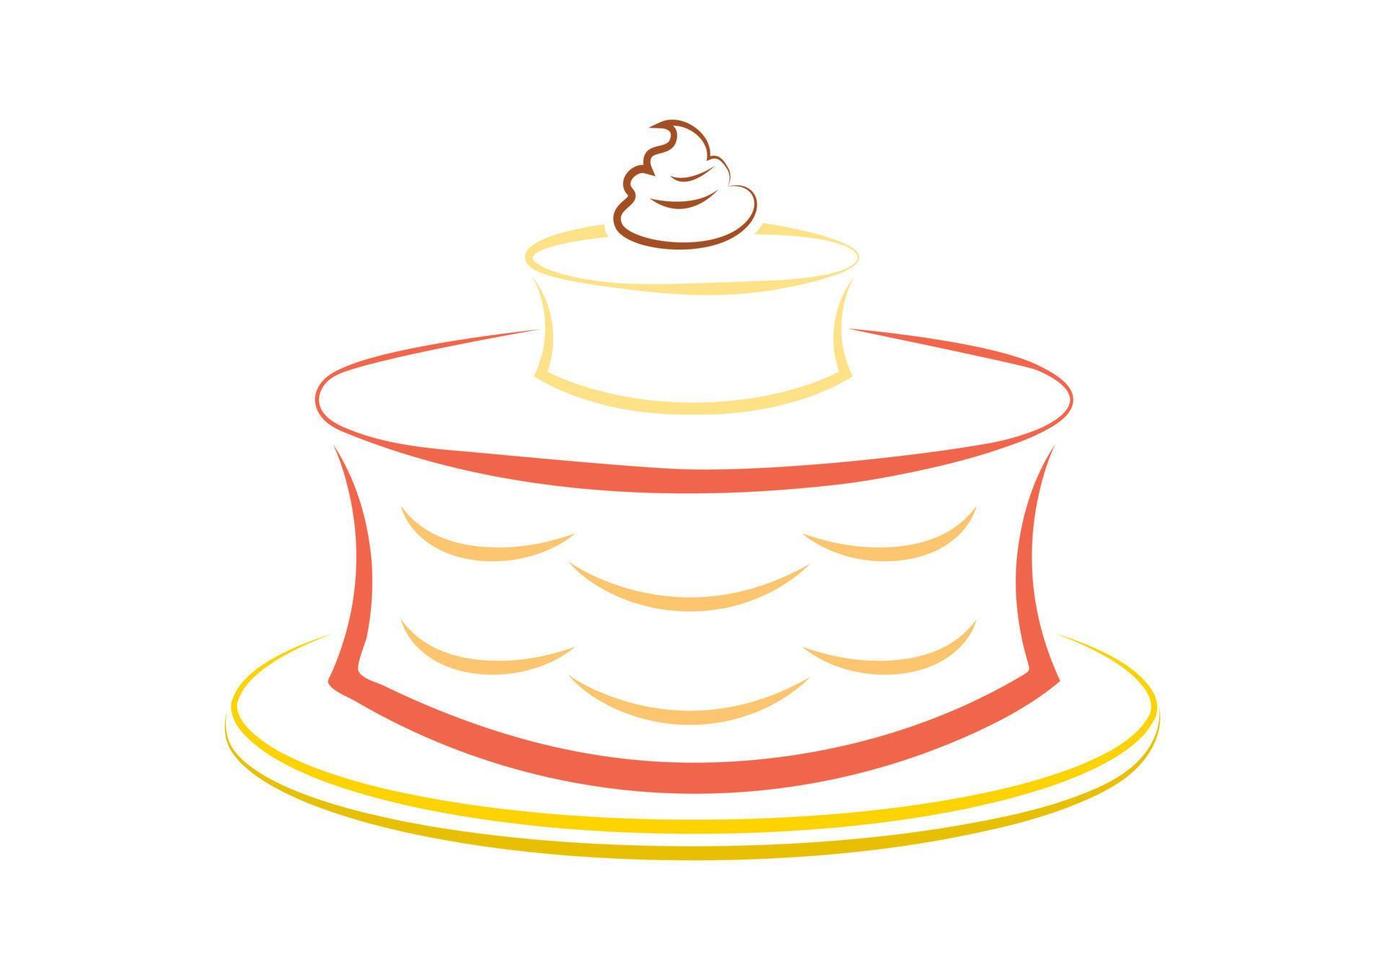 Sweet cake in flat style isolated on white background vector illustration of sweet cake logo